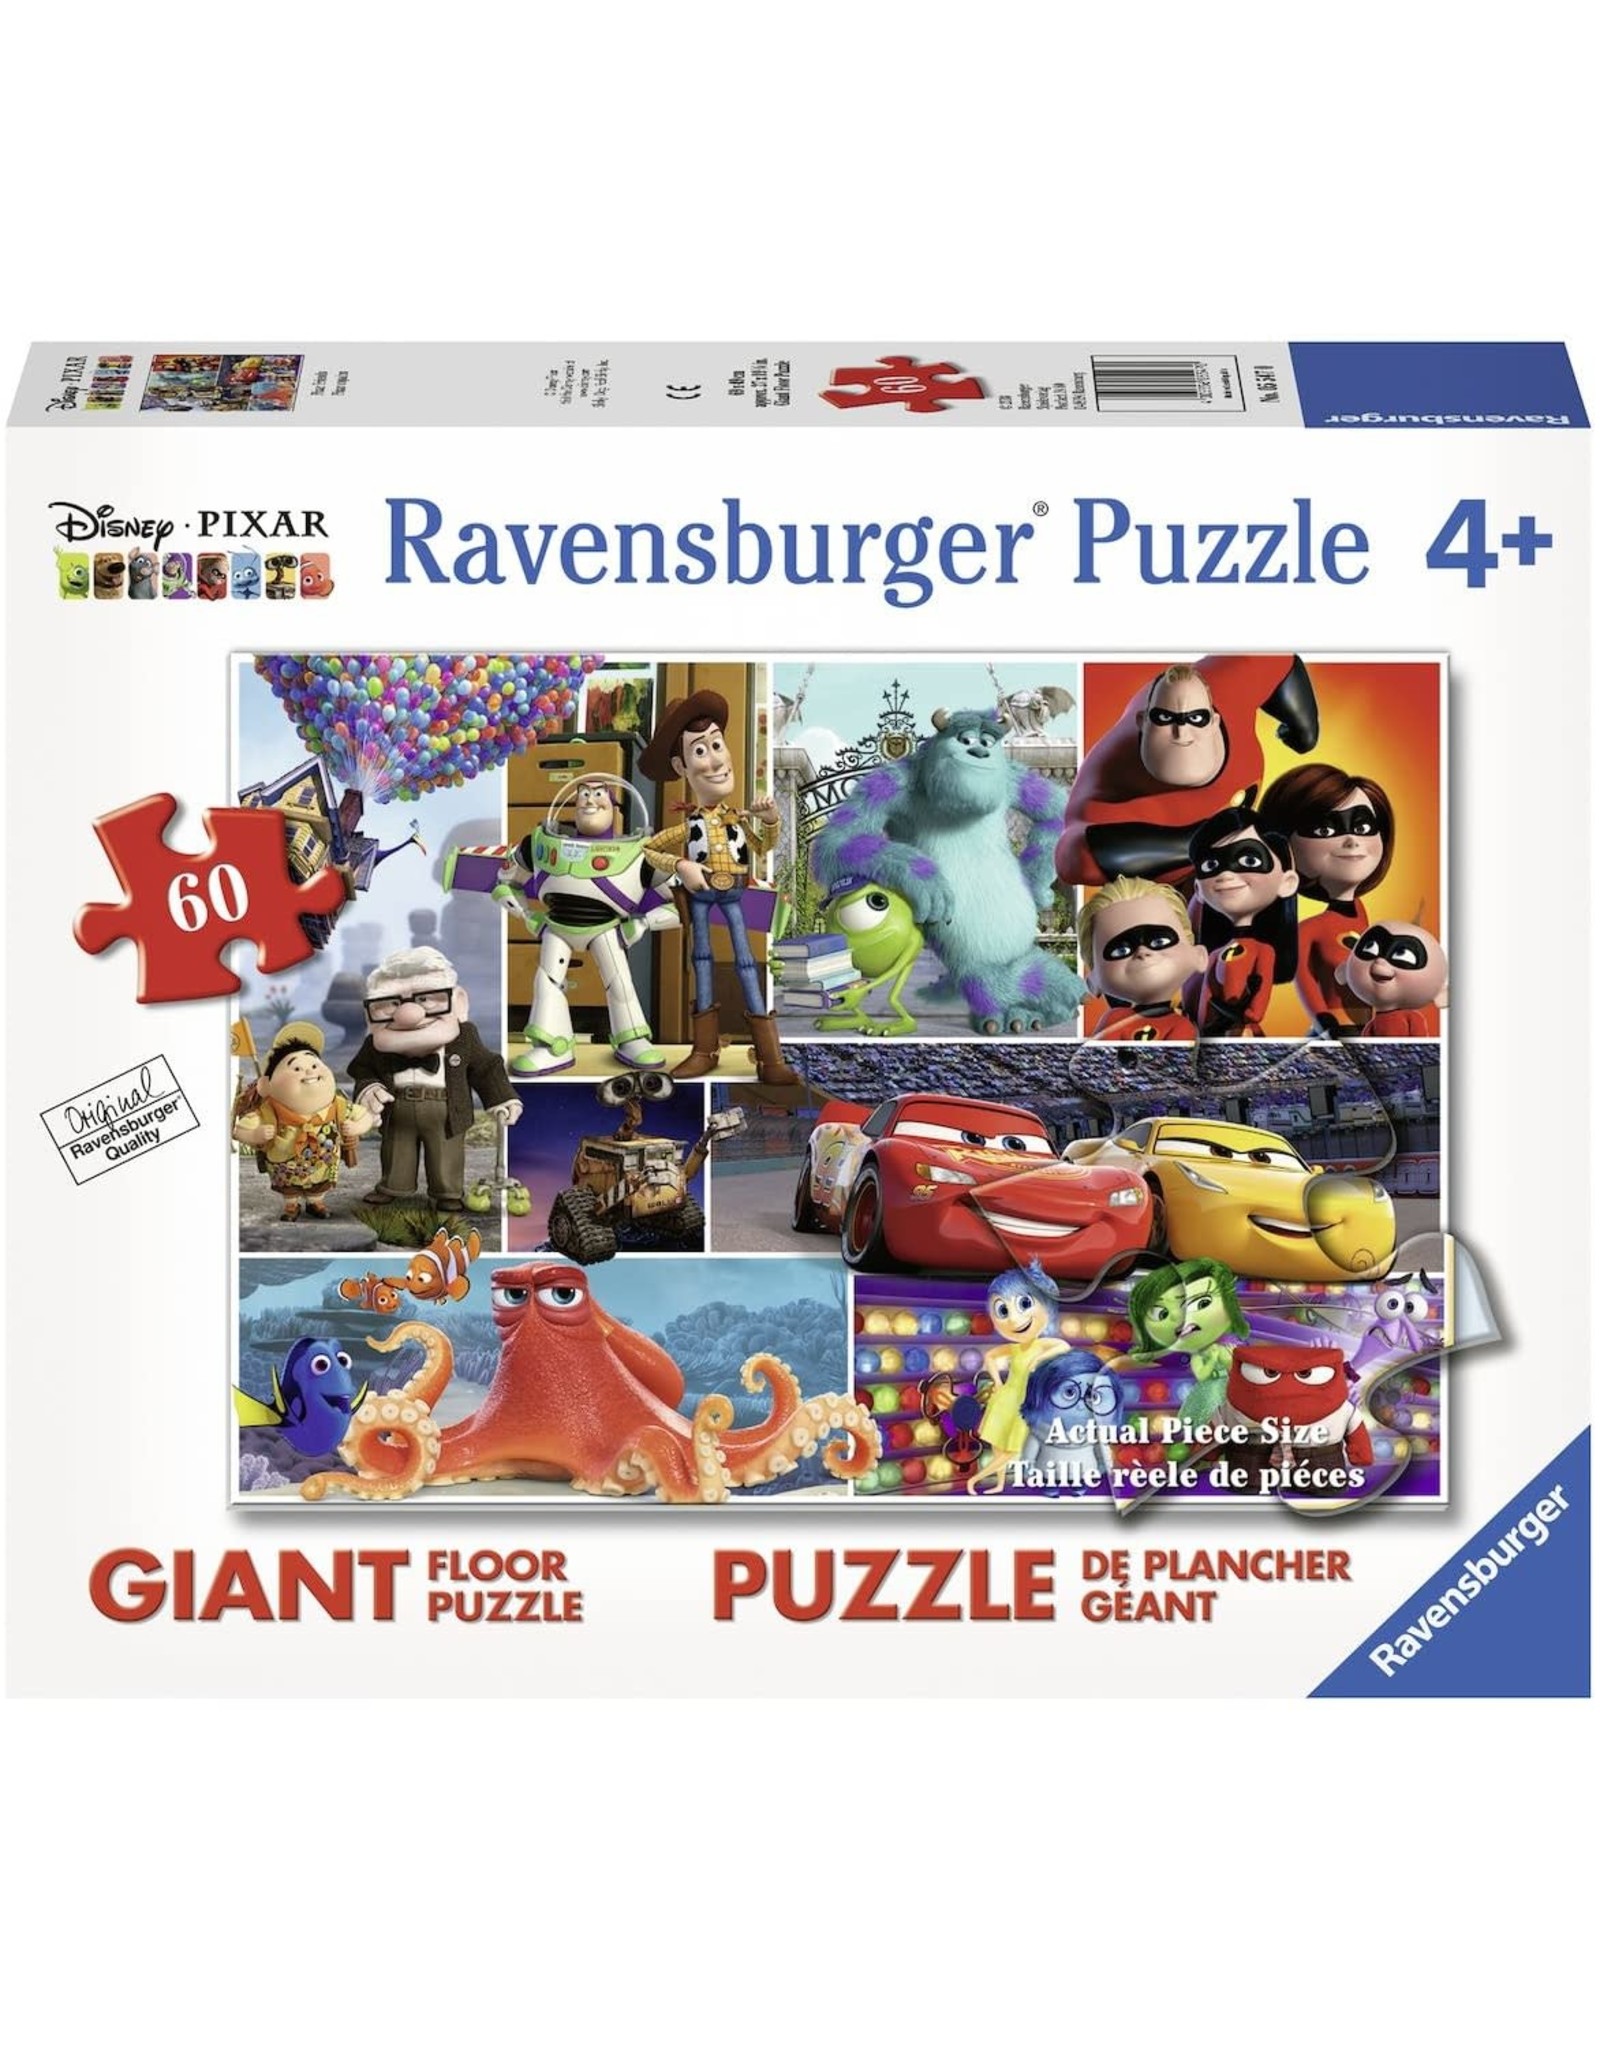 Ravensburger Pixar Friends 60 pc Floor Puzzle